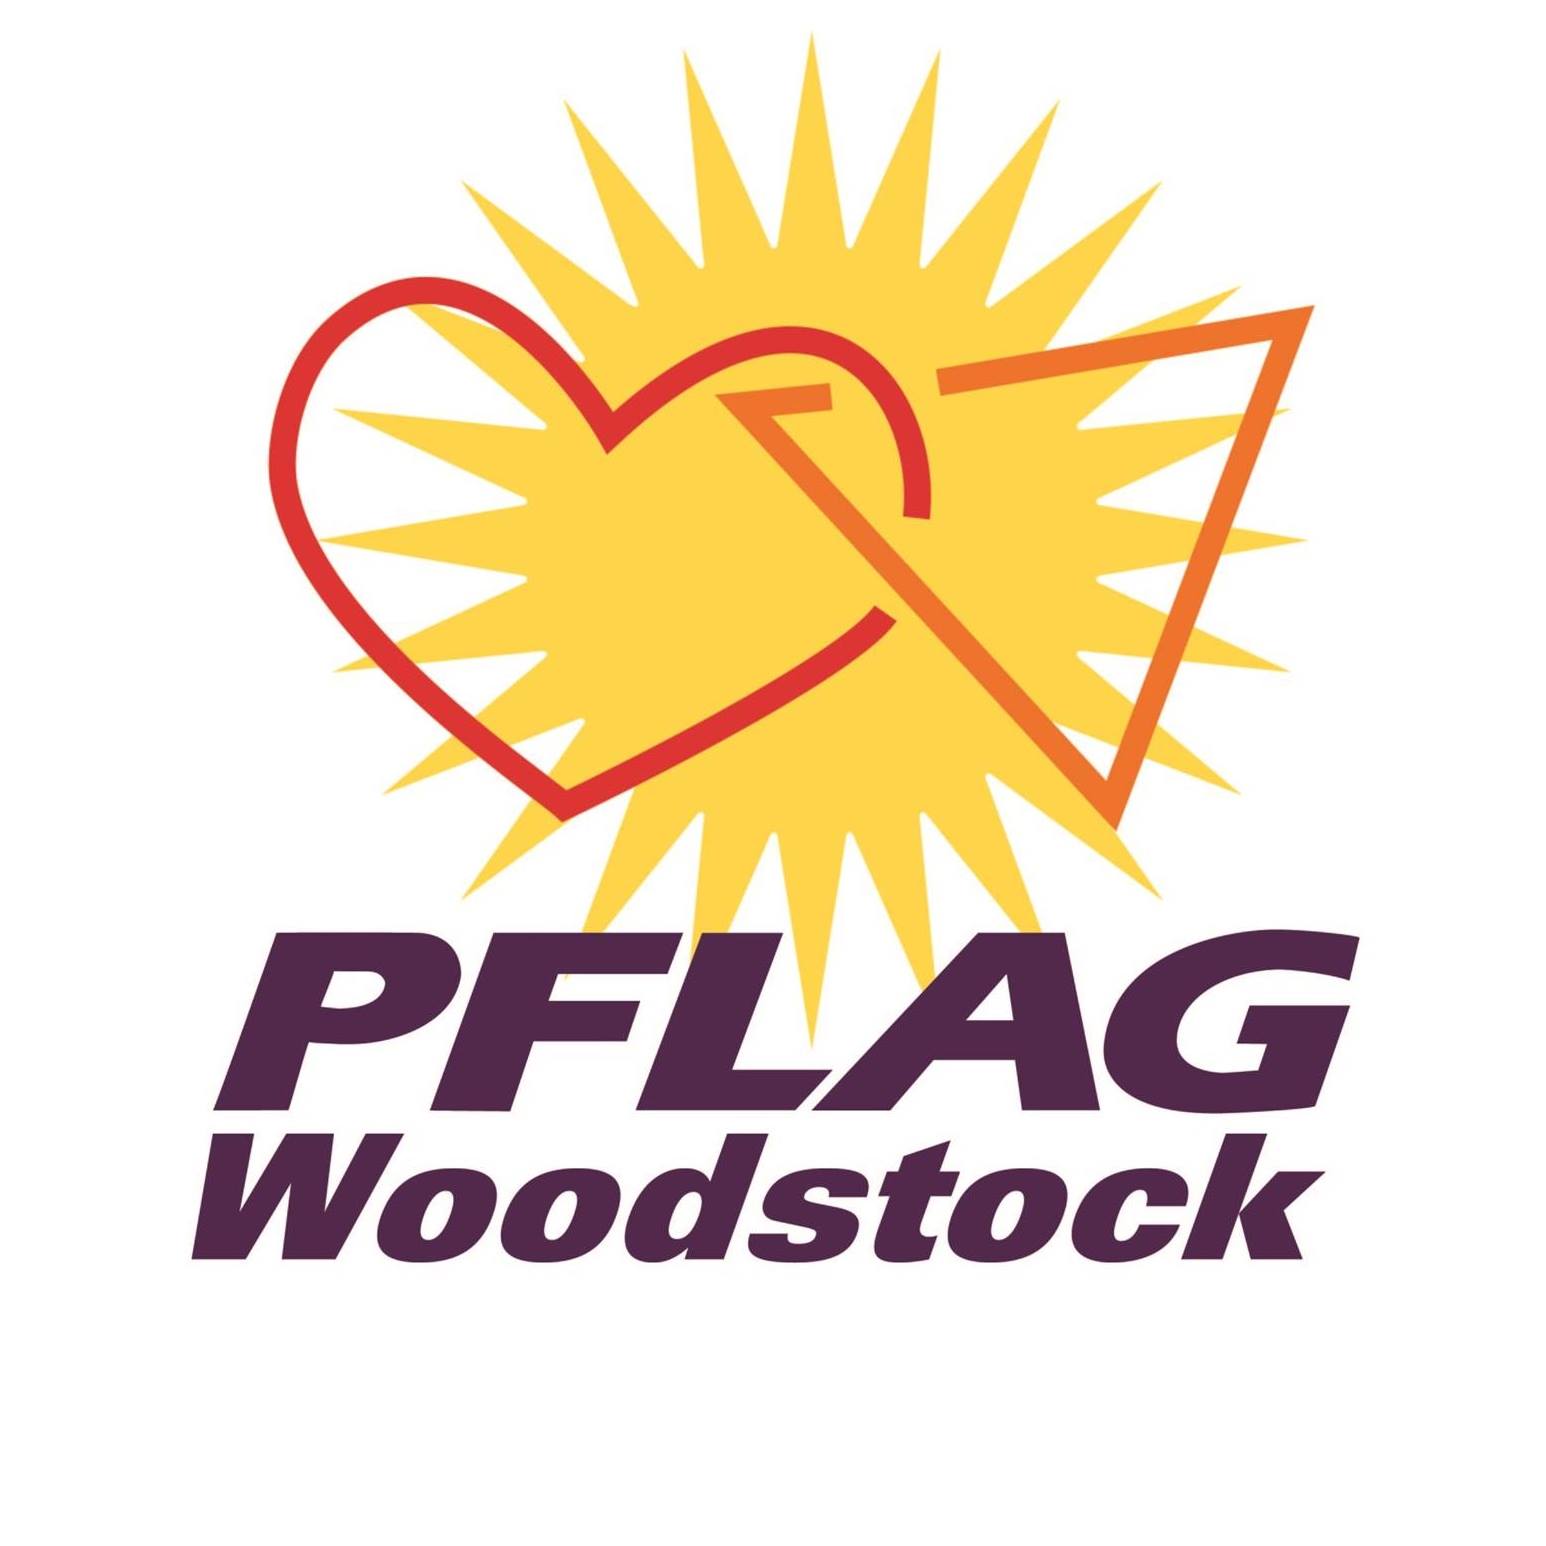 LGBTQ Organizations in Atlanta Georgia - PFLAG Woodstock